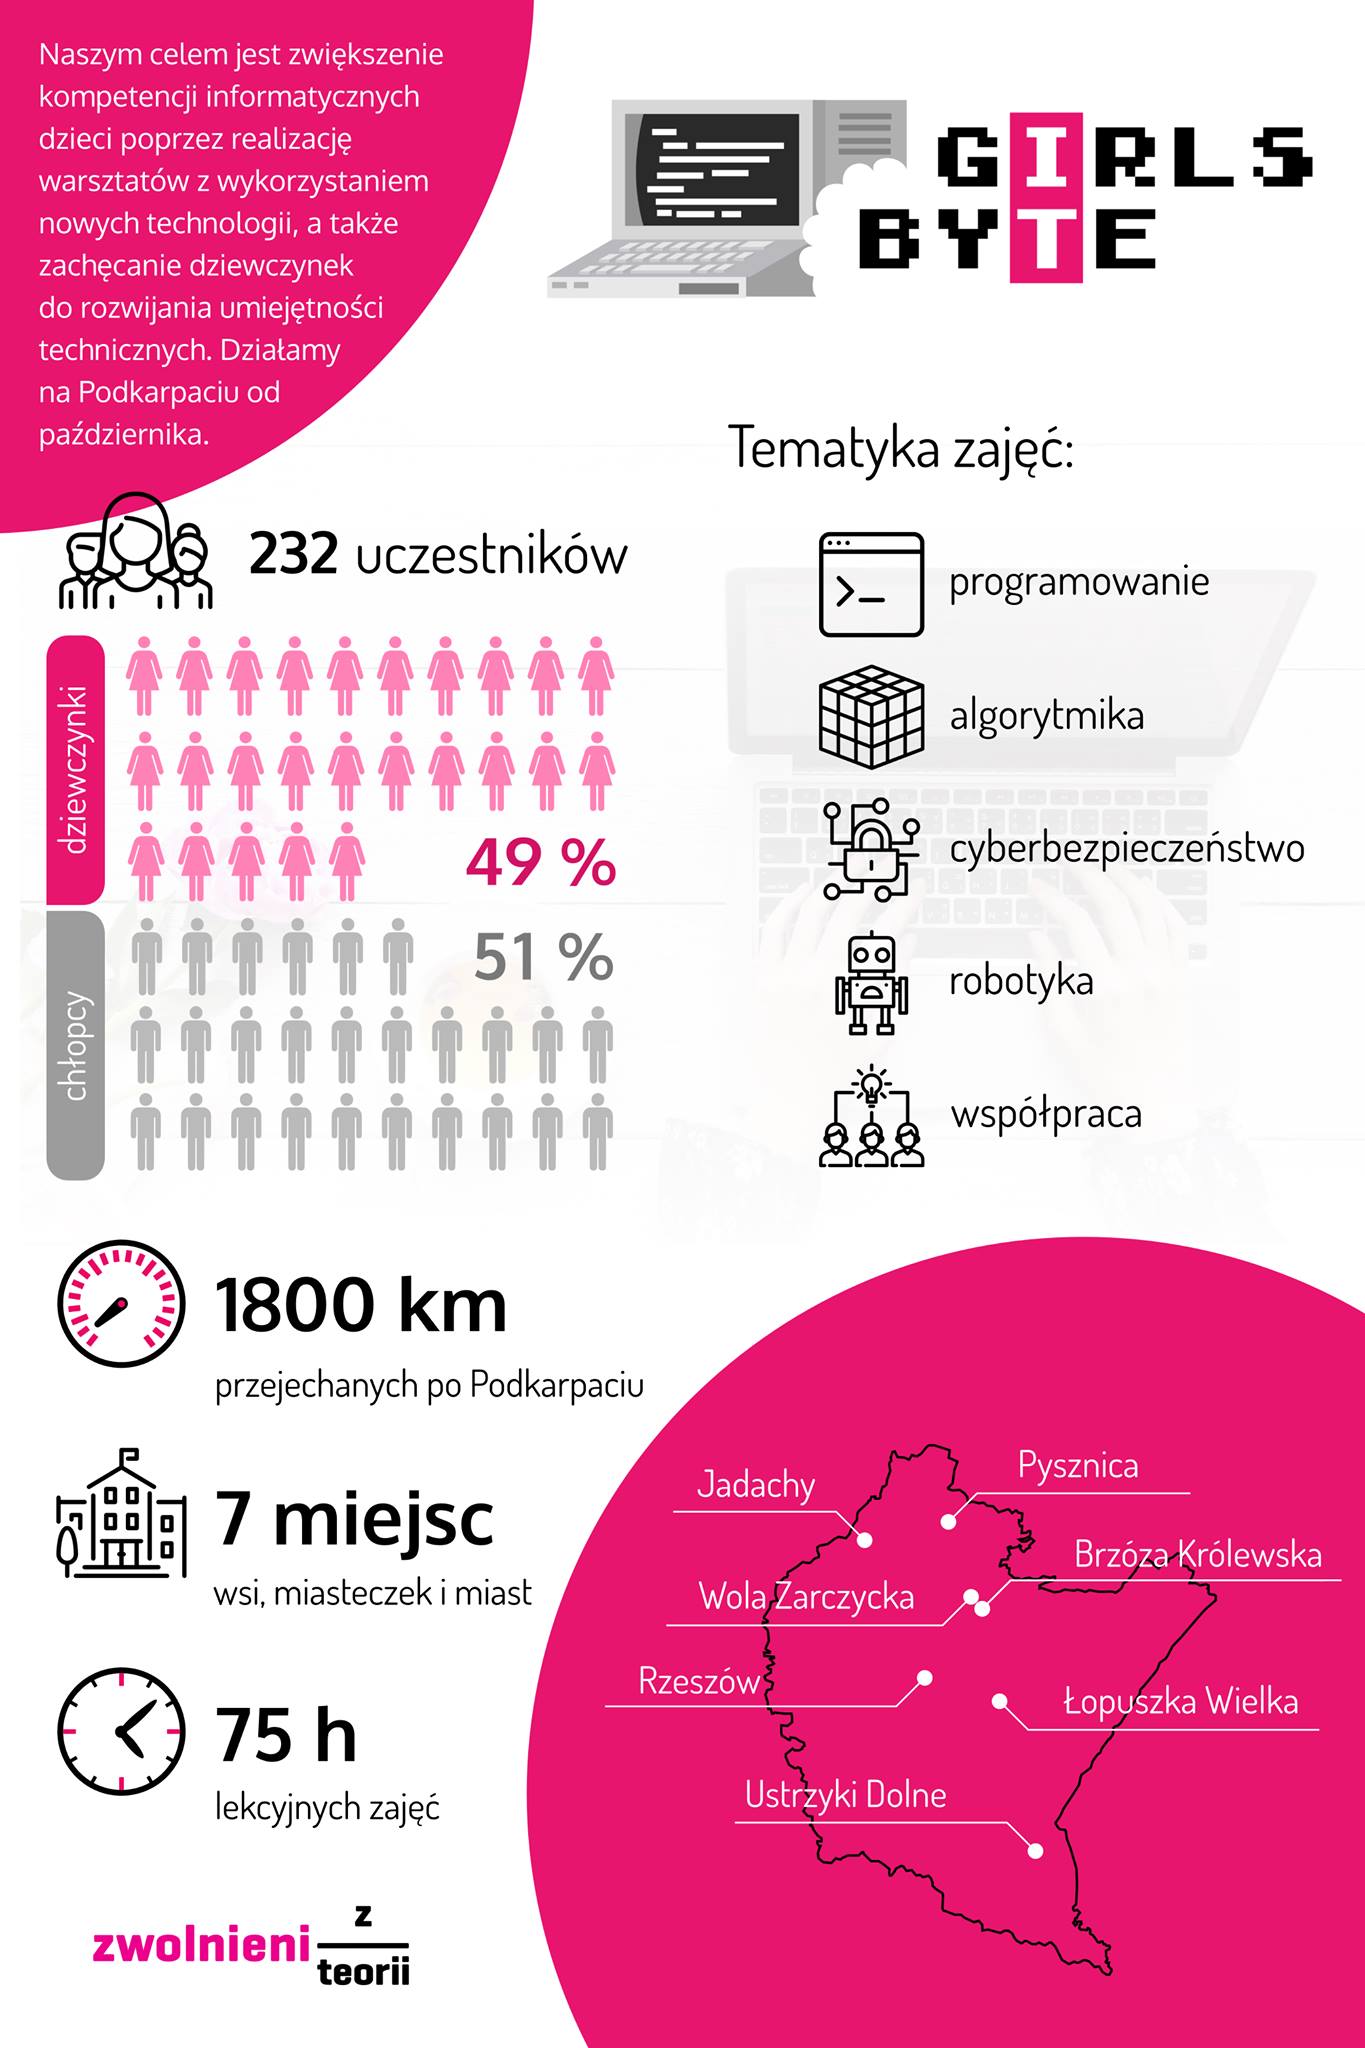 GIRLS Byte - infografika - geek cat